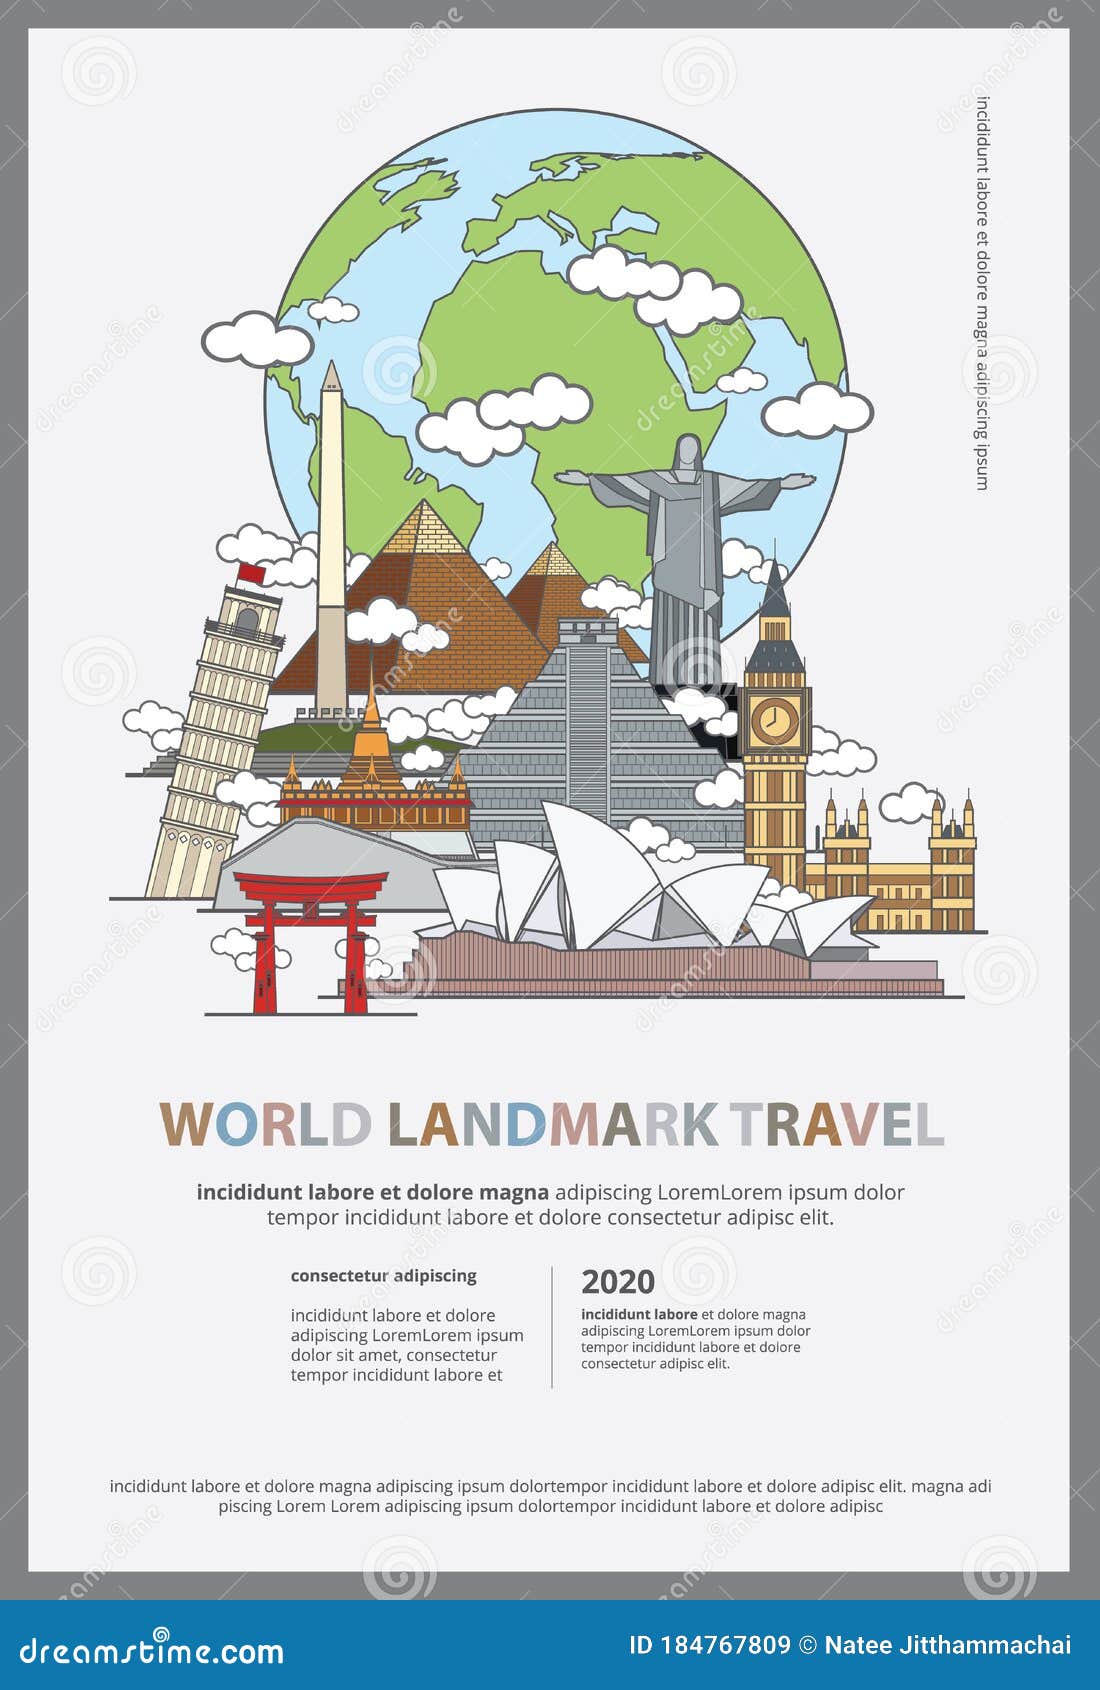 The World Landmark Travel Poster Design Template Editorial Stock Image